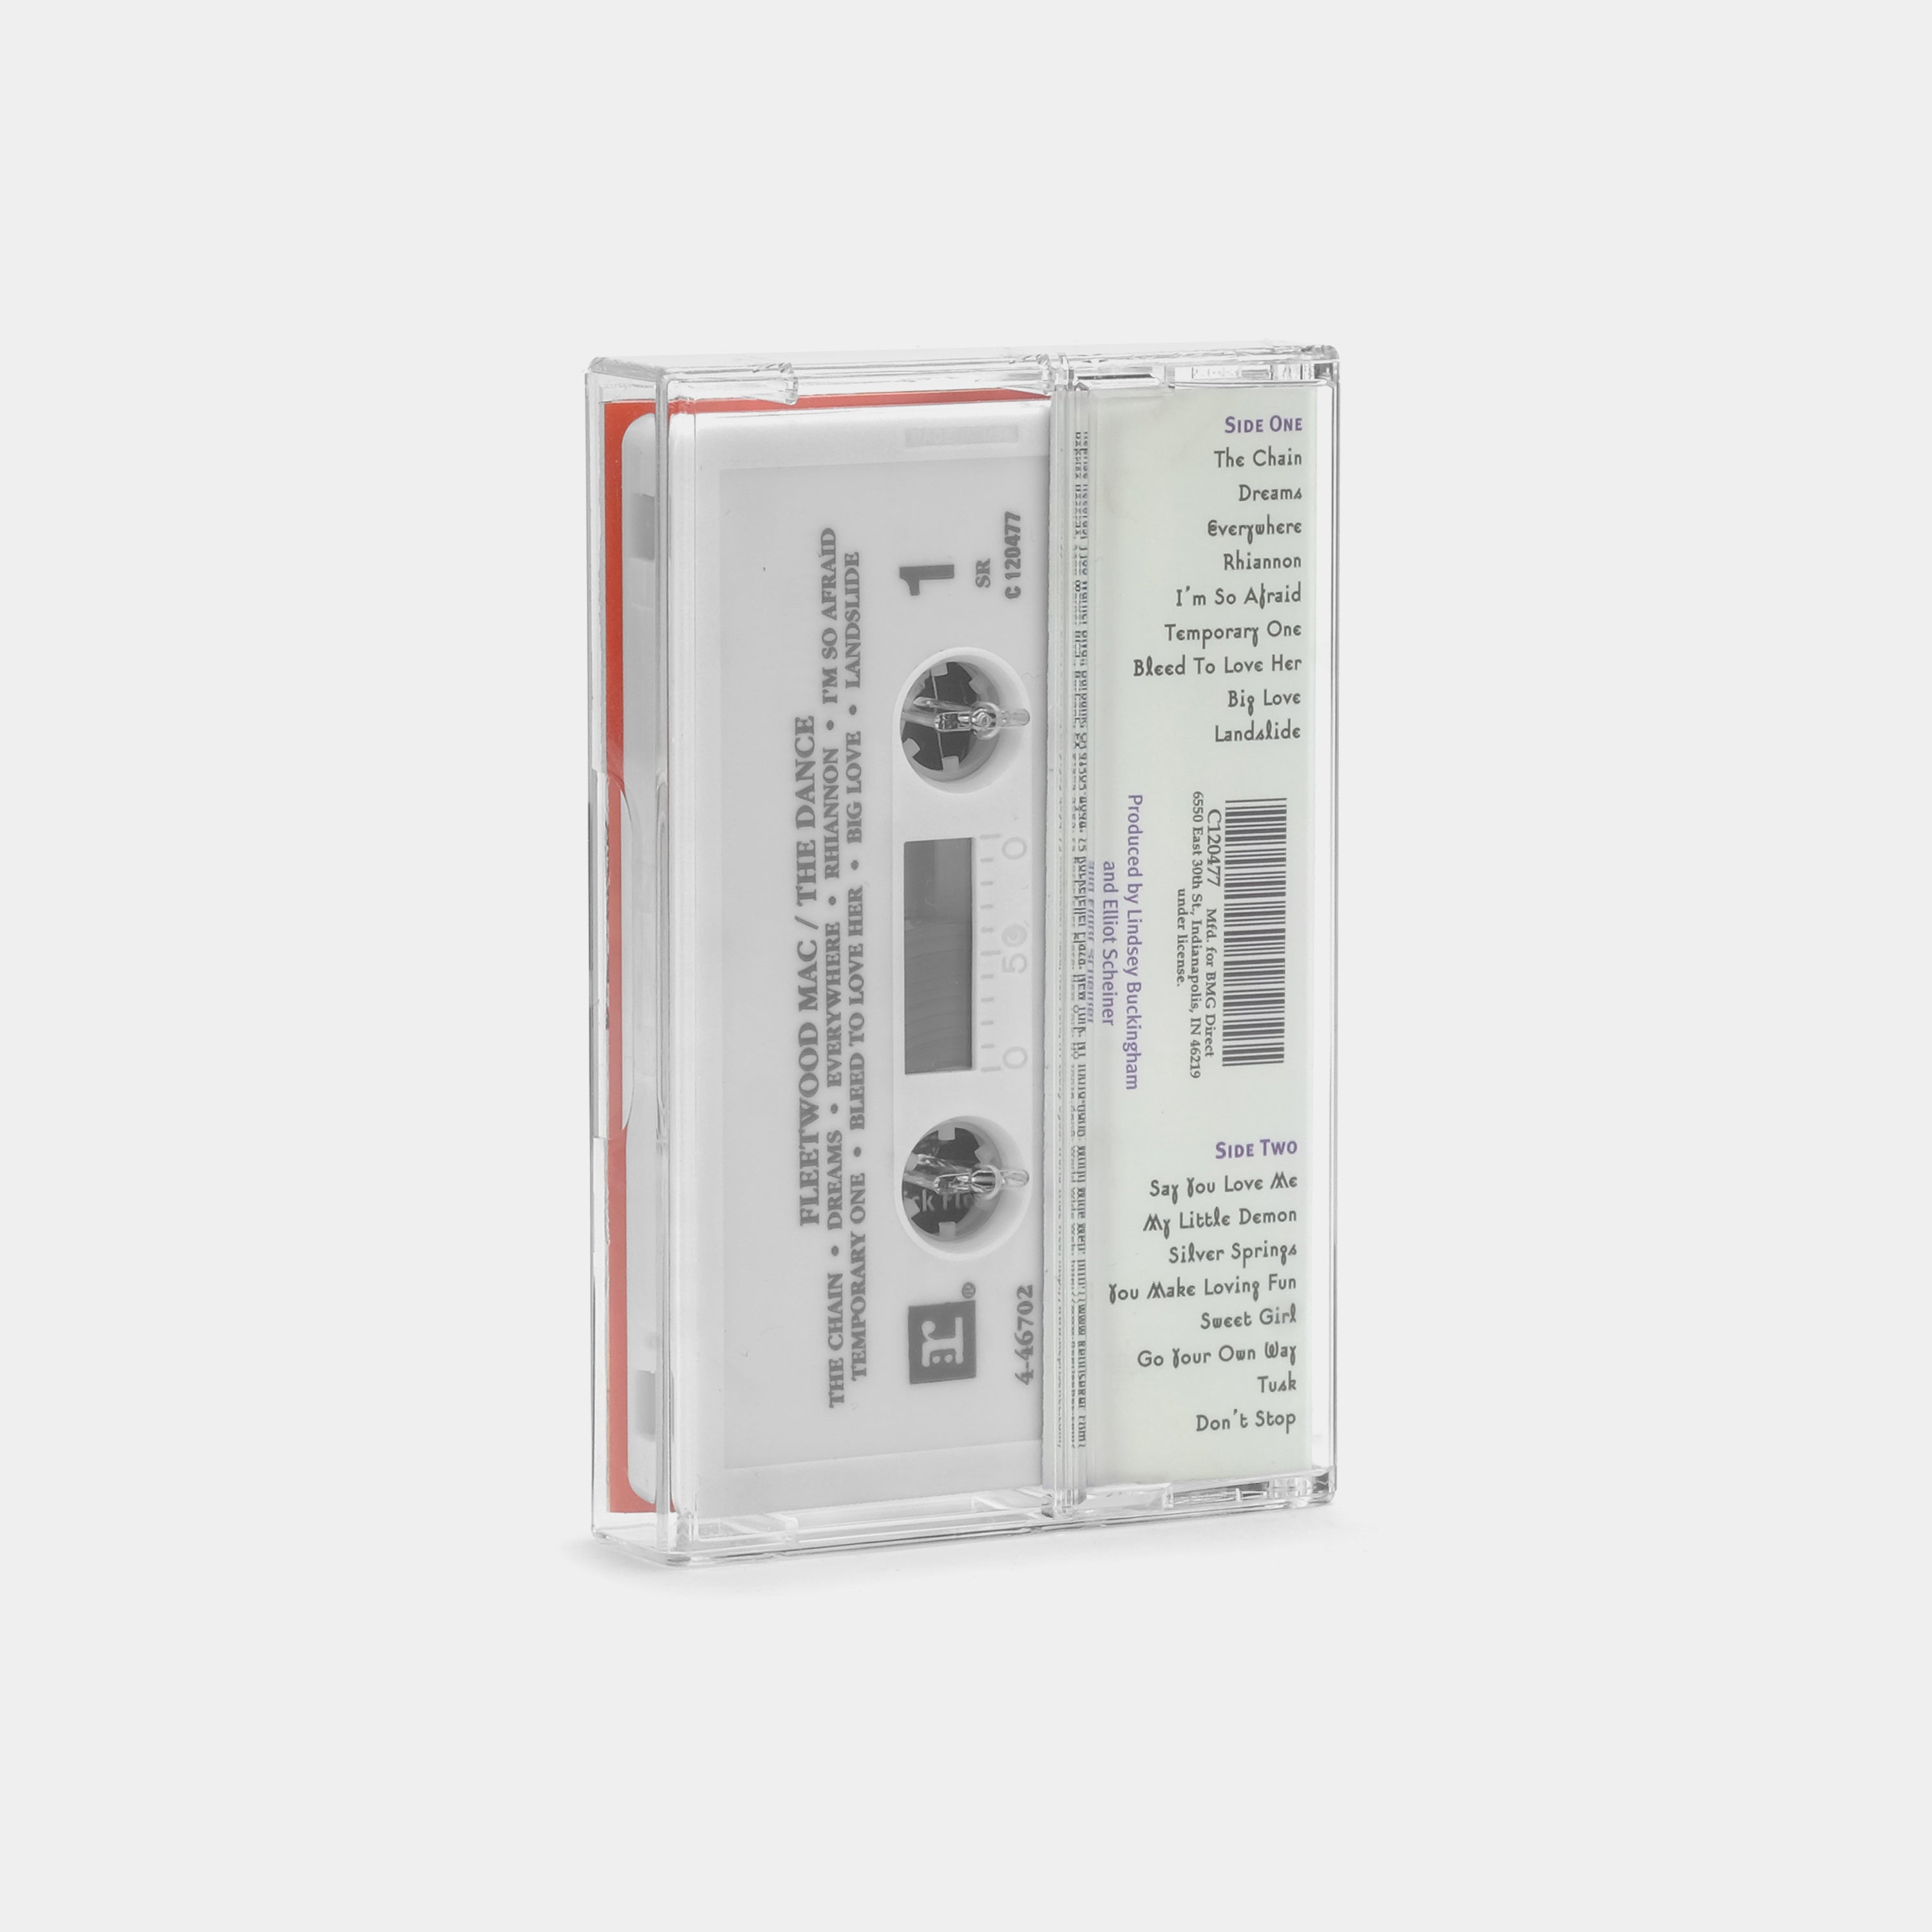 Fleetwood Mac - The Dance Cassette Tape